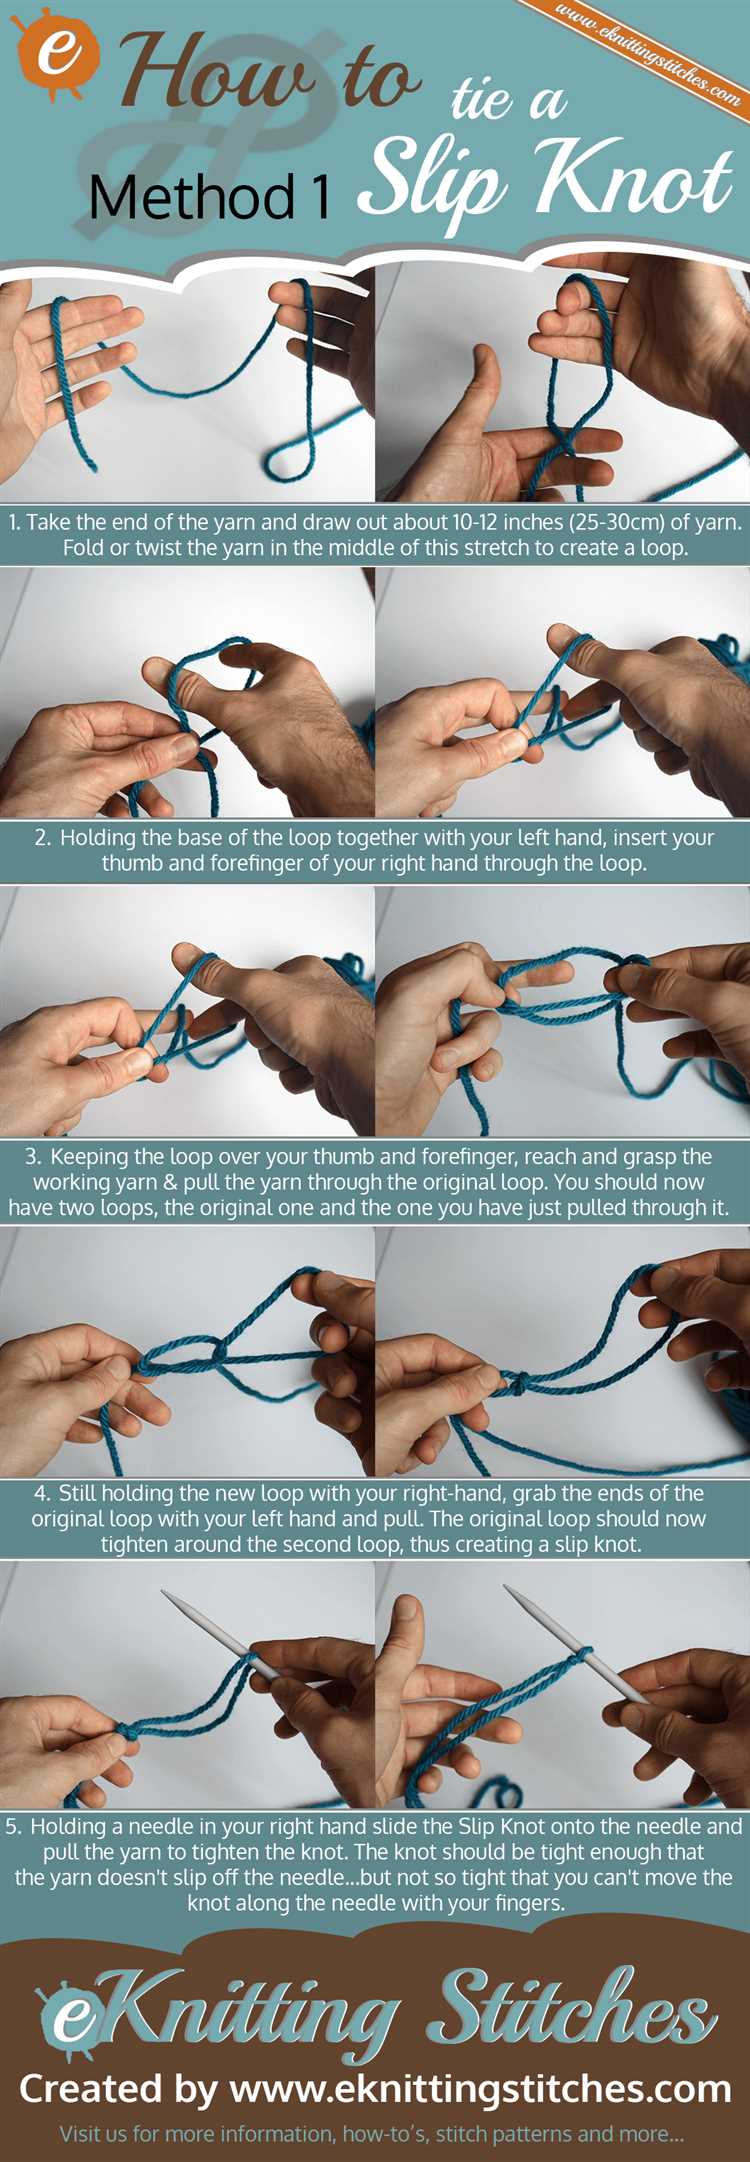 Adjust the knot